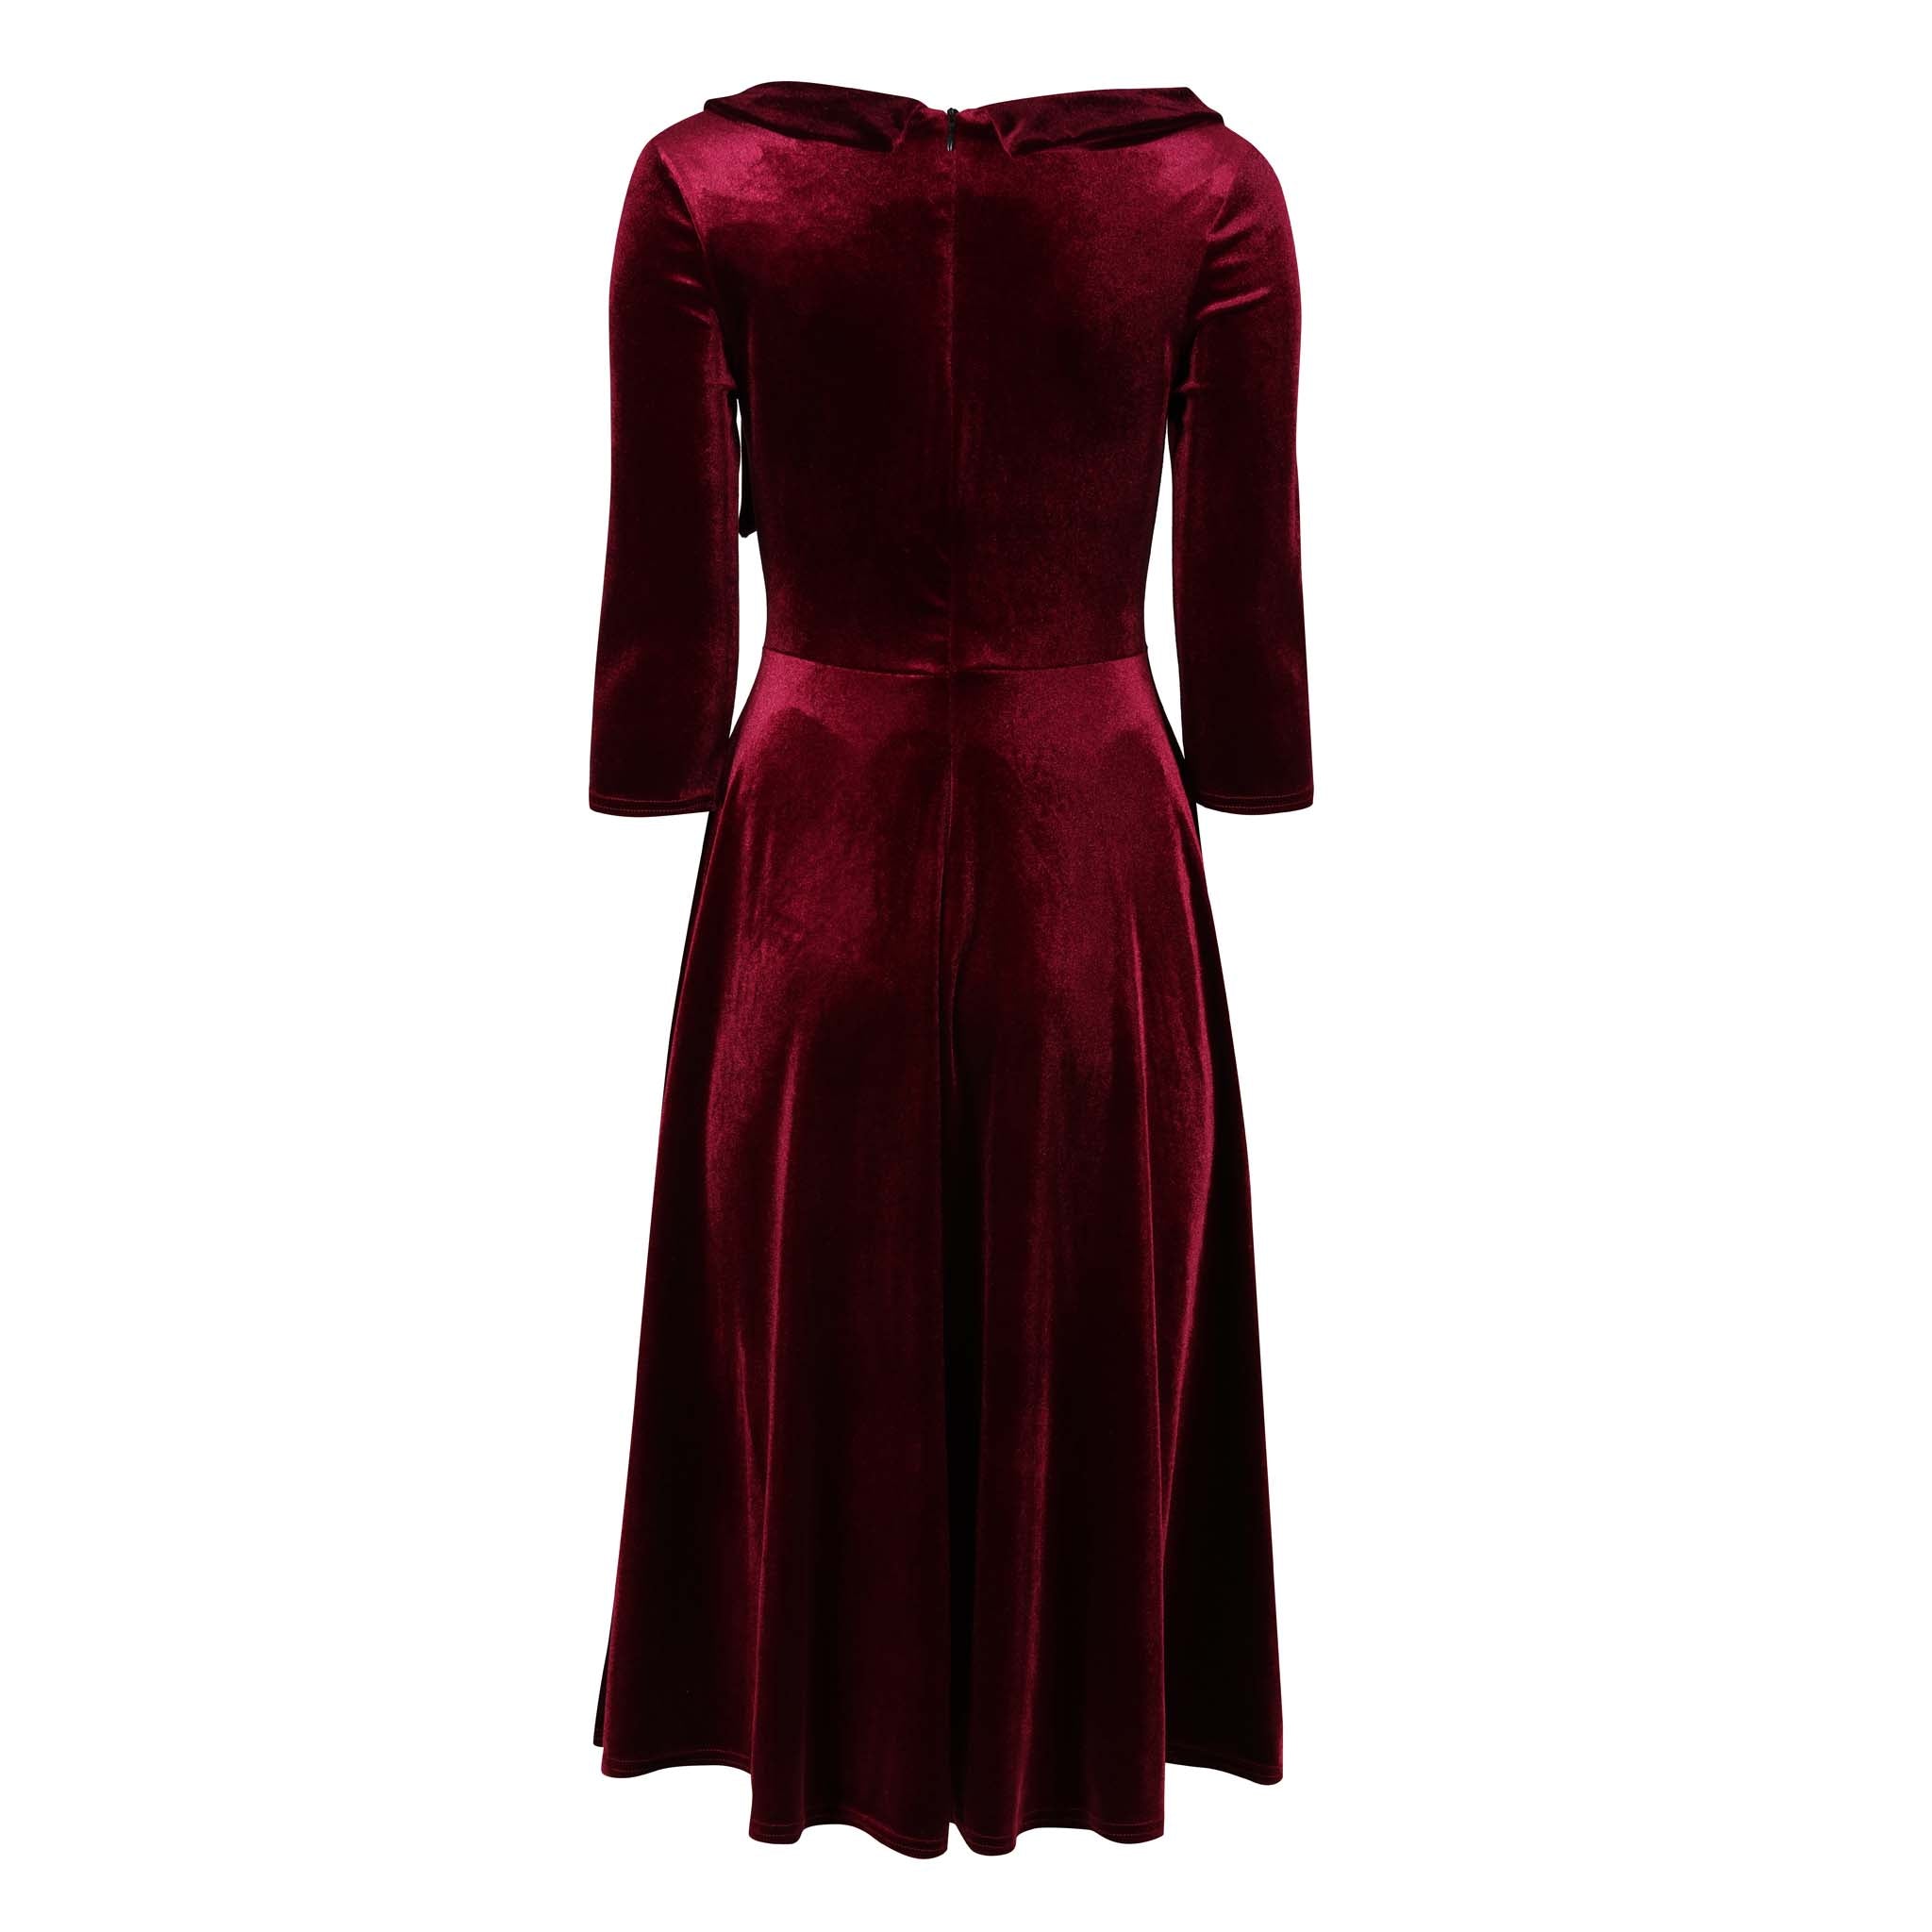 Velour Claret Red Tie 1/2 Sleeve Vintage Swing Dress